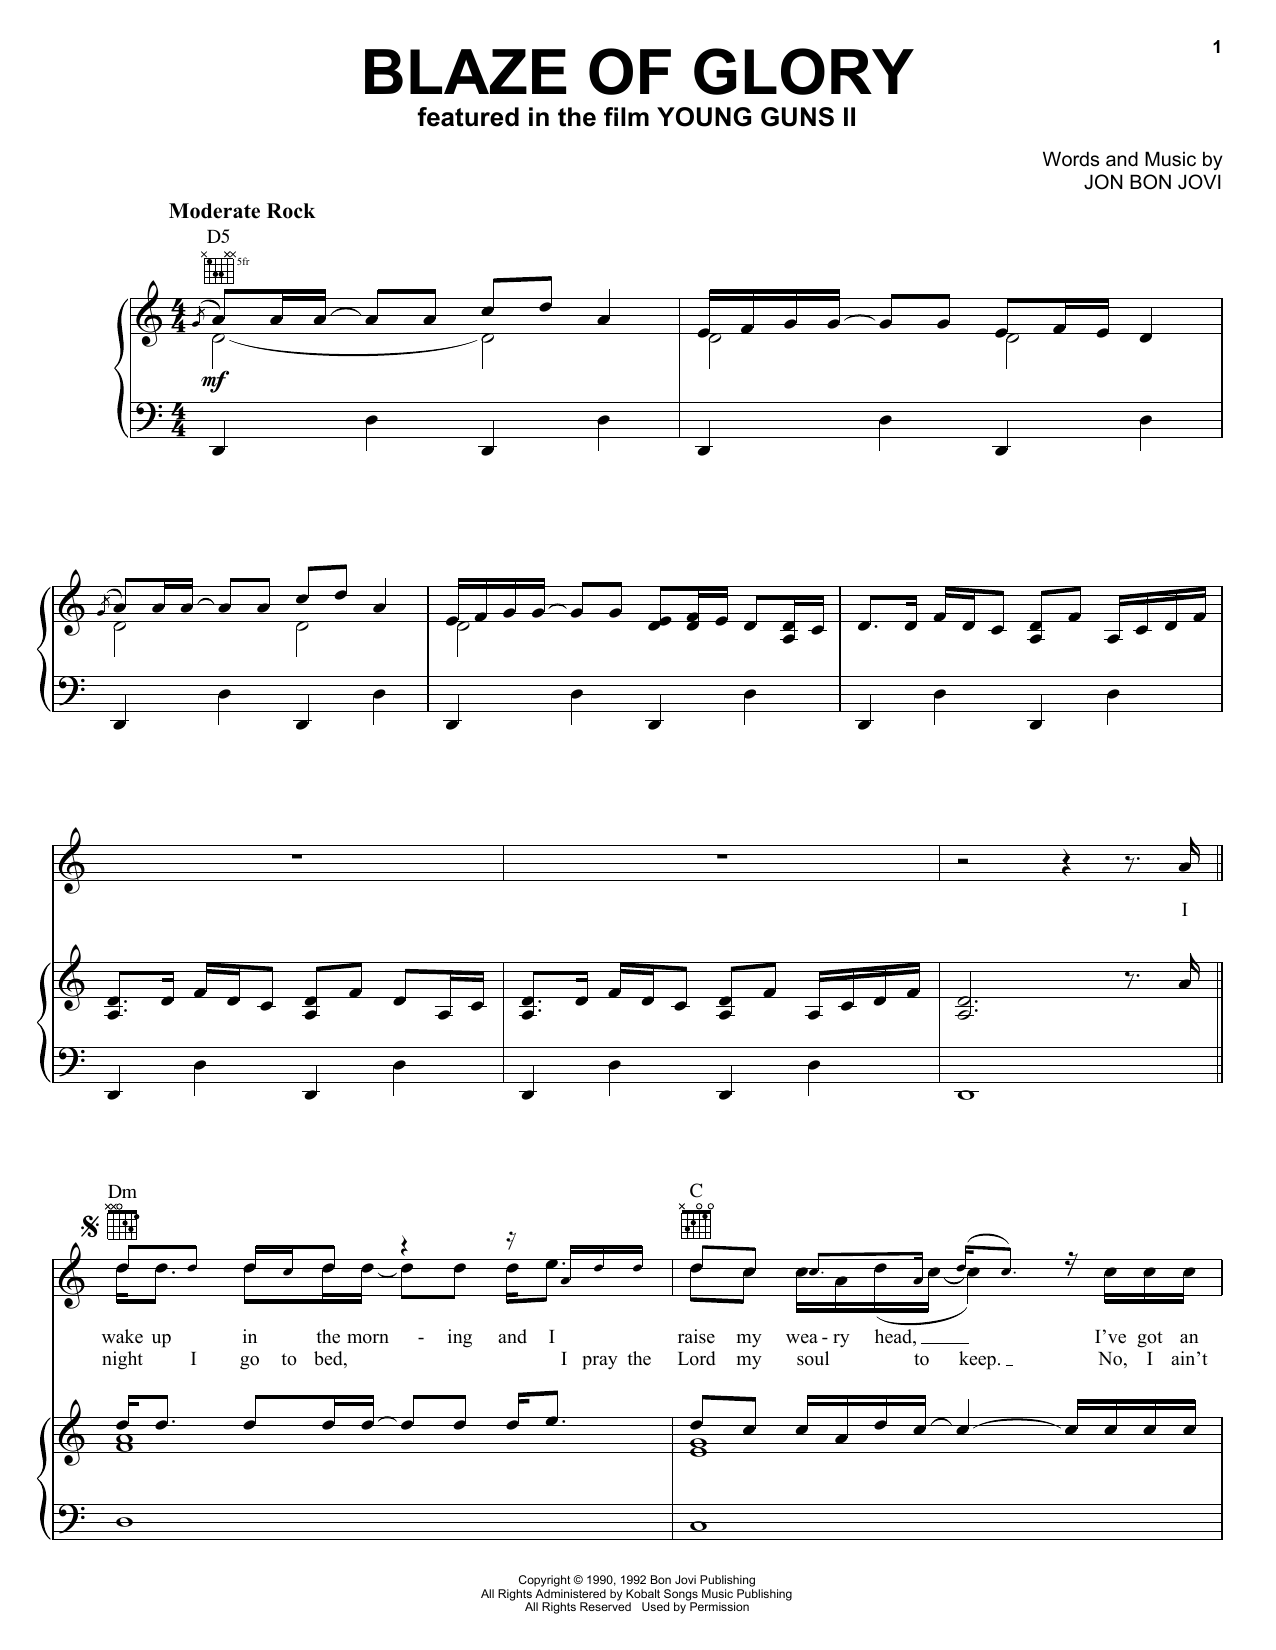 Download Jon Bon Jovi Blaze Of Glory Sheet Music and learn how to play Tenor Saxophone PDF digital score in minutes